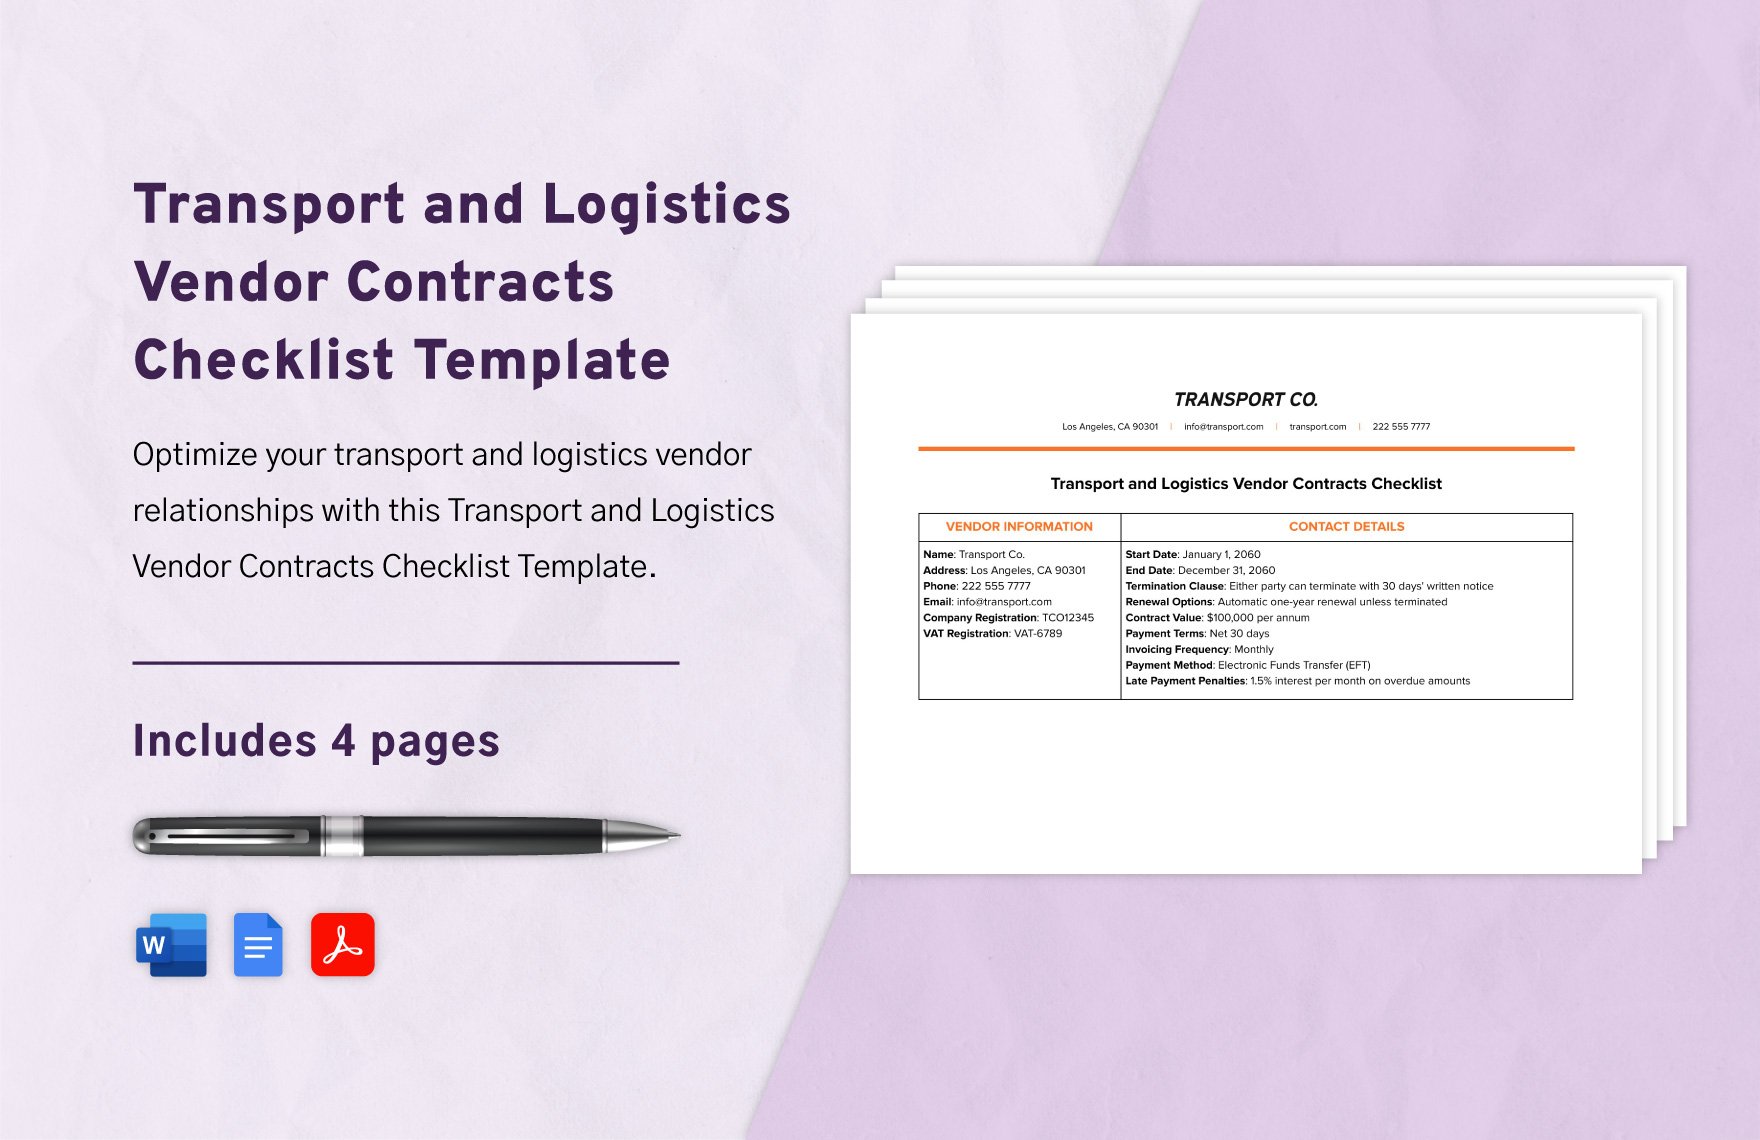 Transport and Logistics Vendor Contracts Checklist Template in Word, Google Docs, PDF